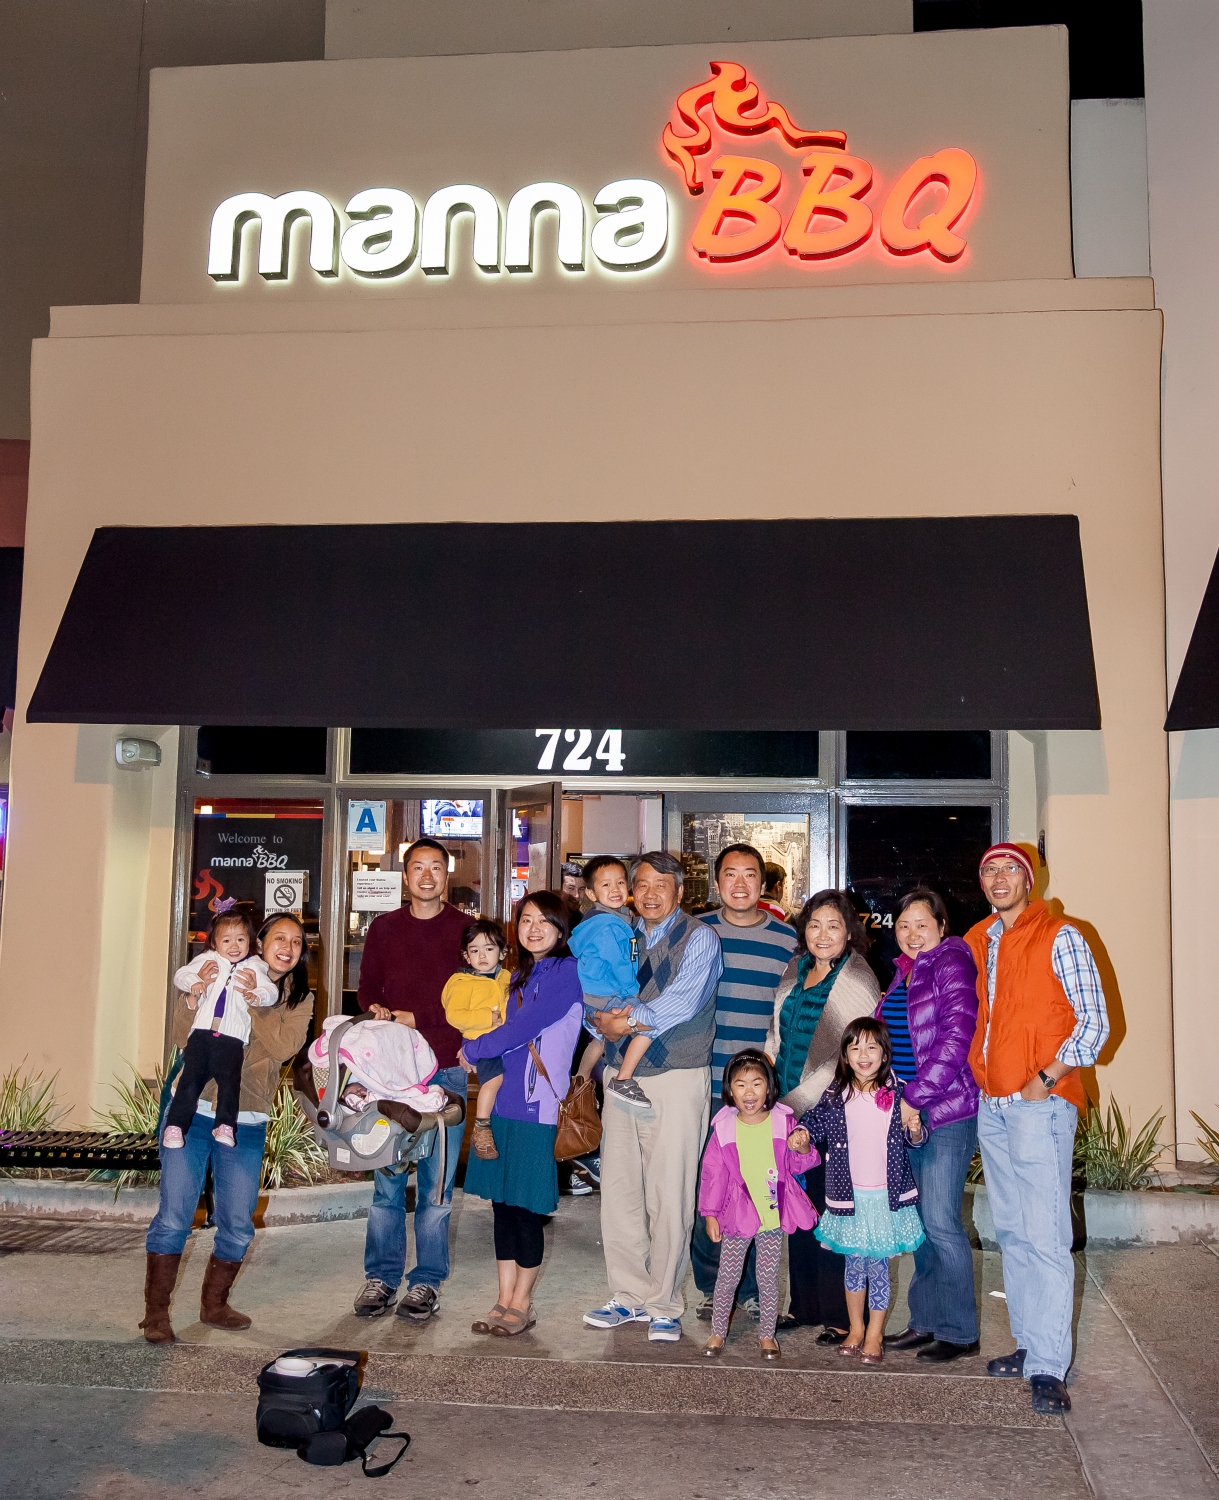 Birthday dinner for Mama at Manna BBQ